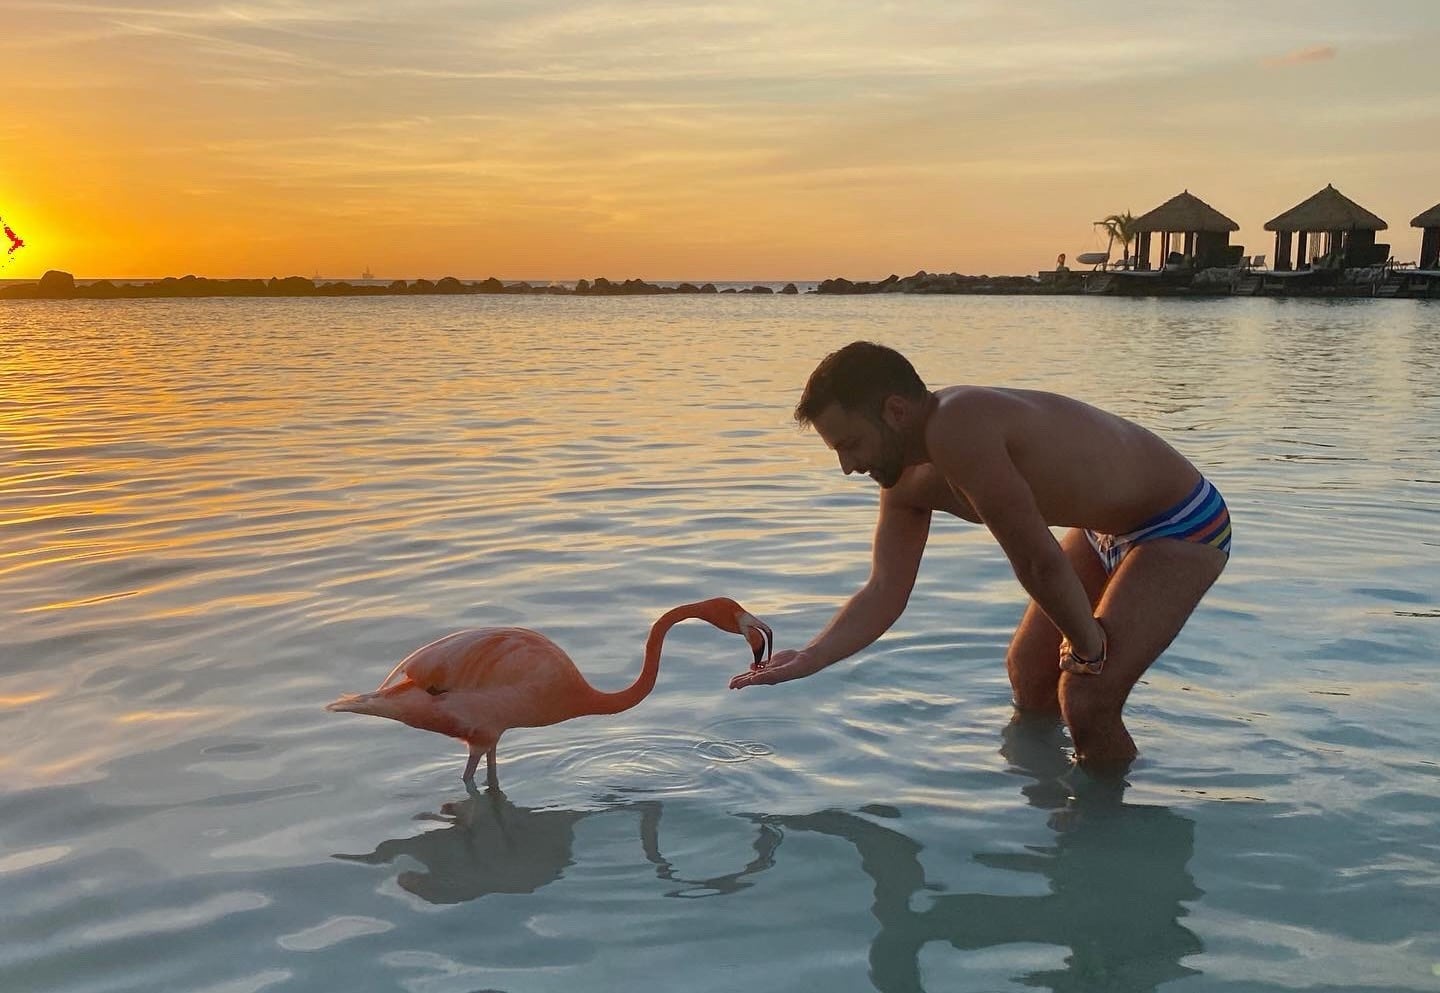 Turkish guy Saf with flamingo at beach.